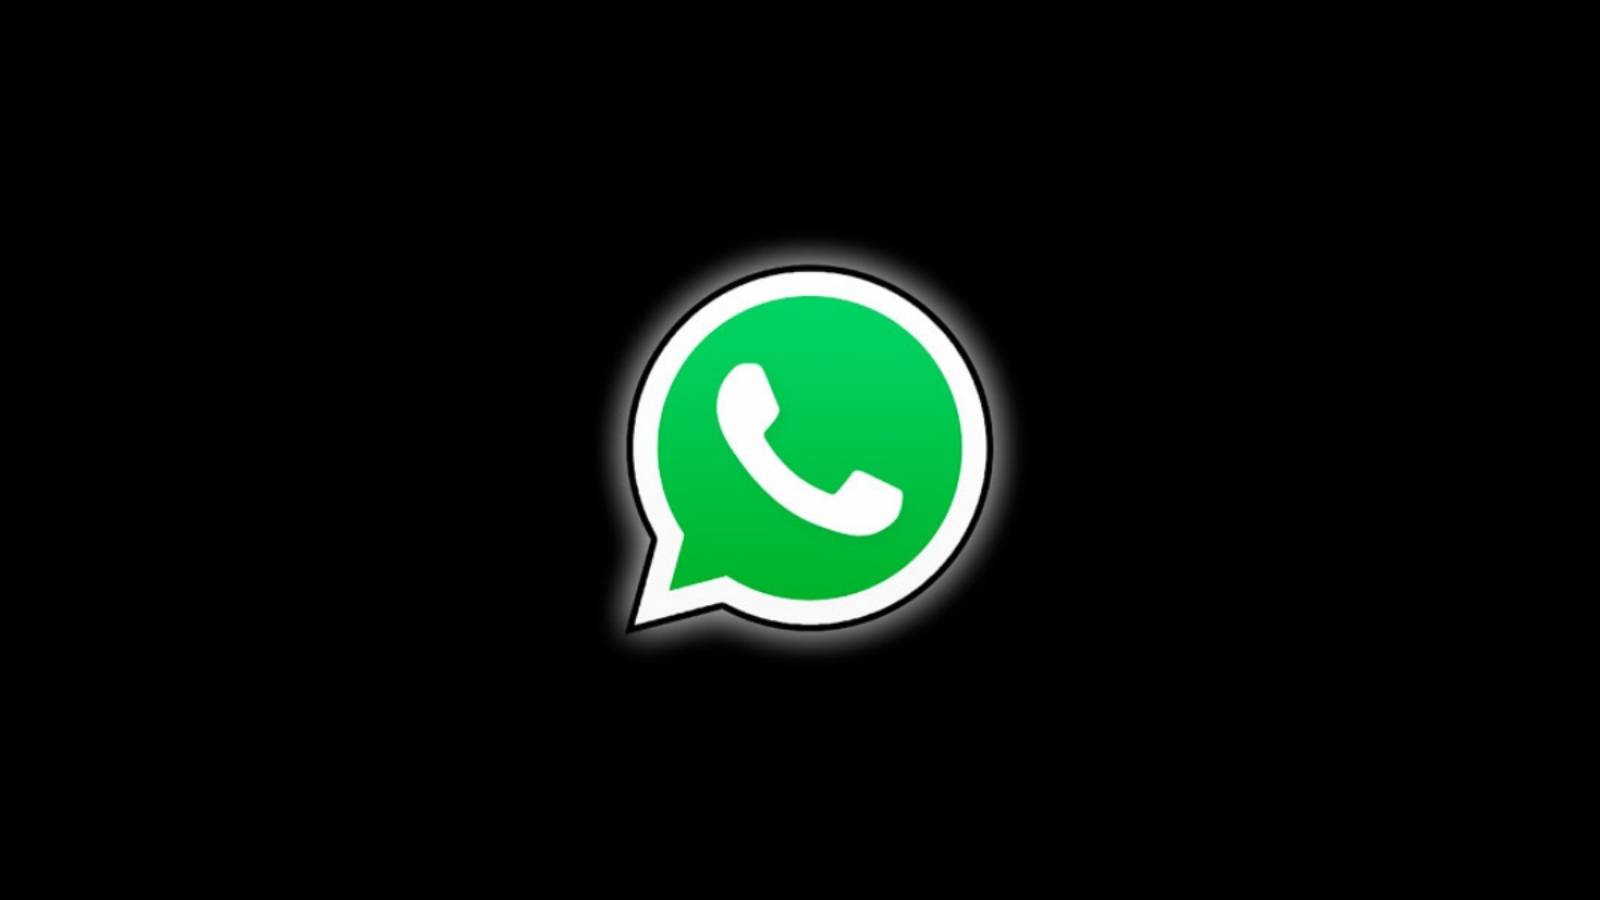 WhatsApp nya telefonfunktioner